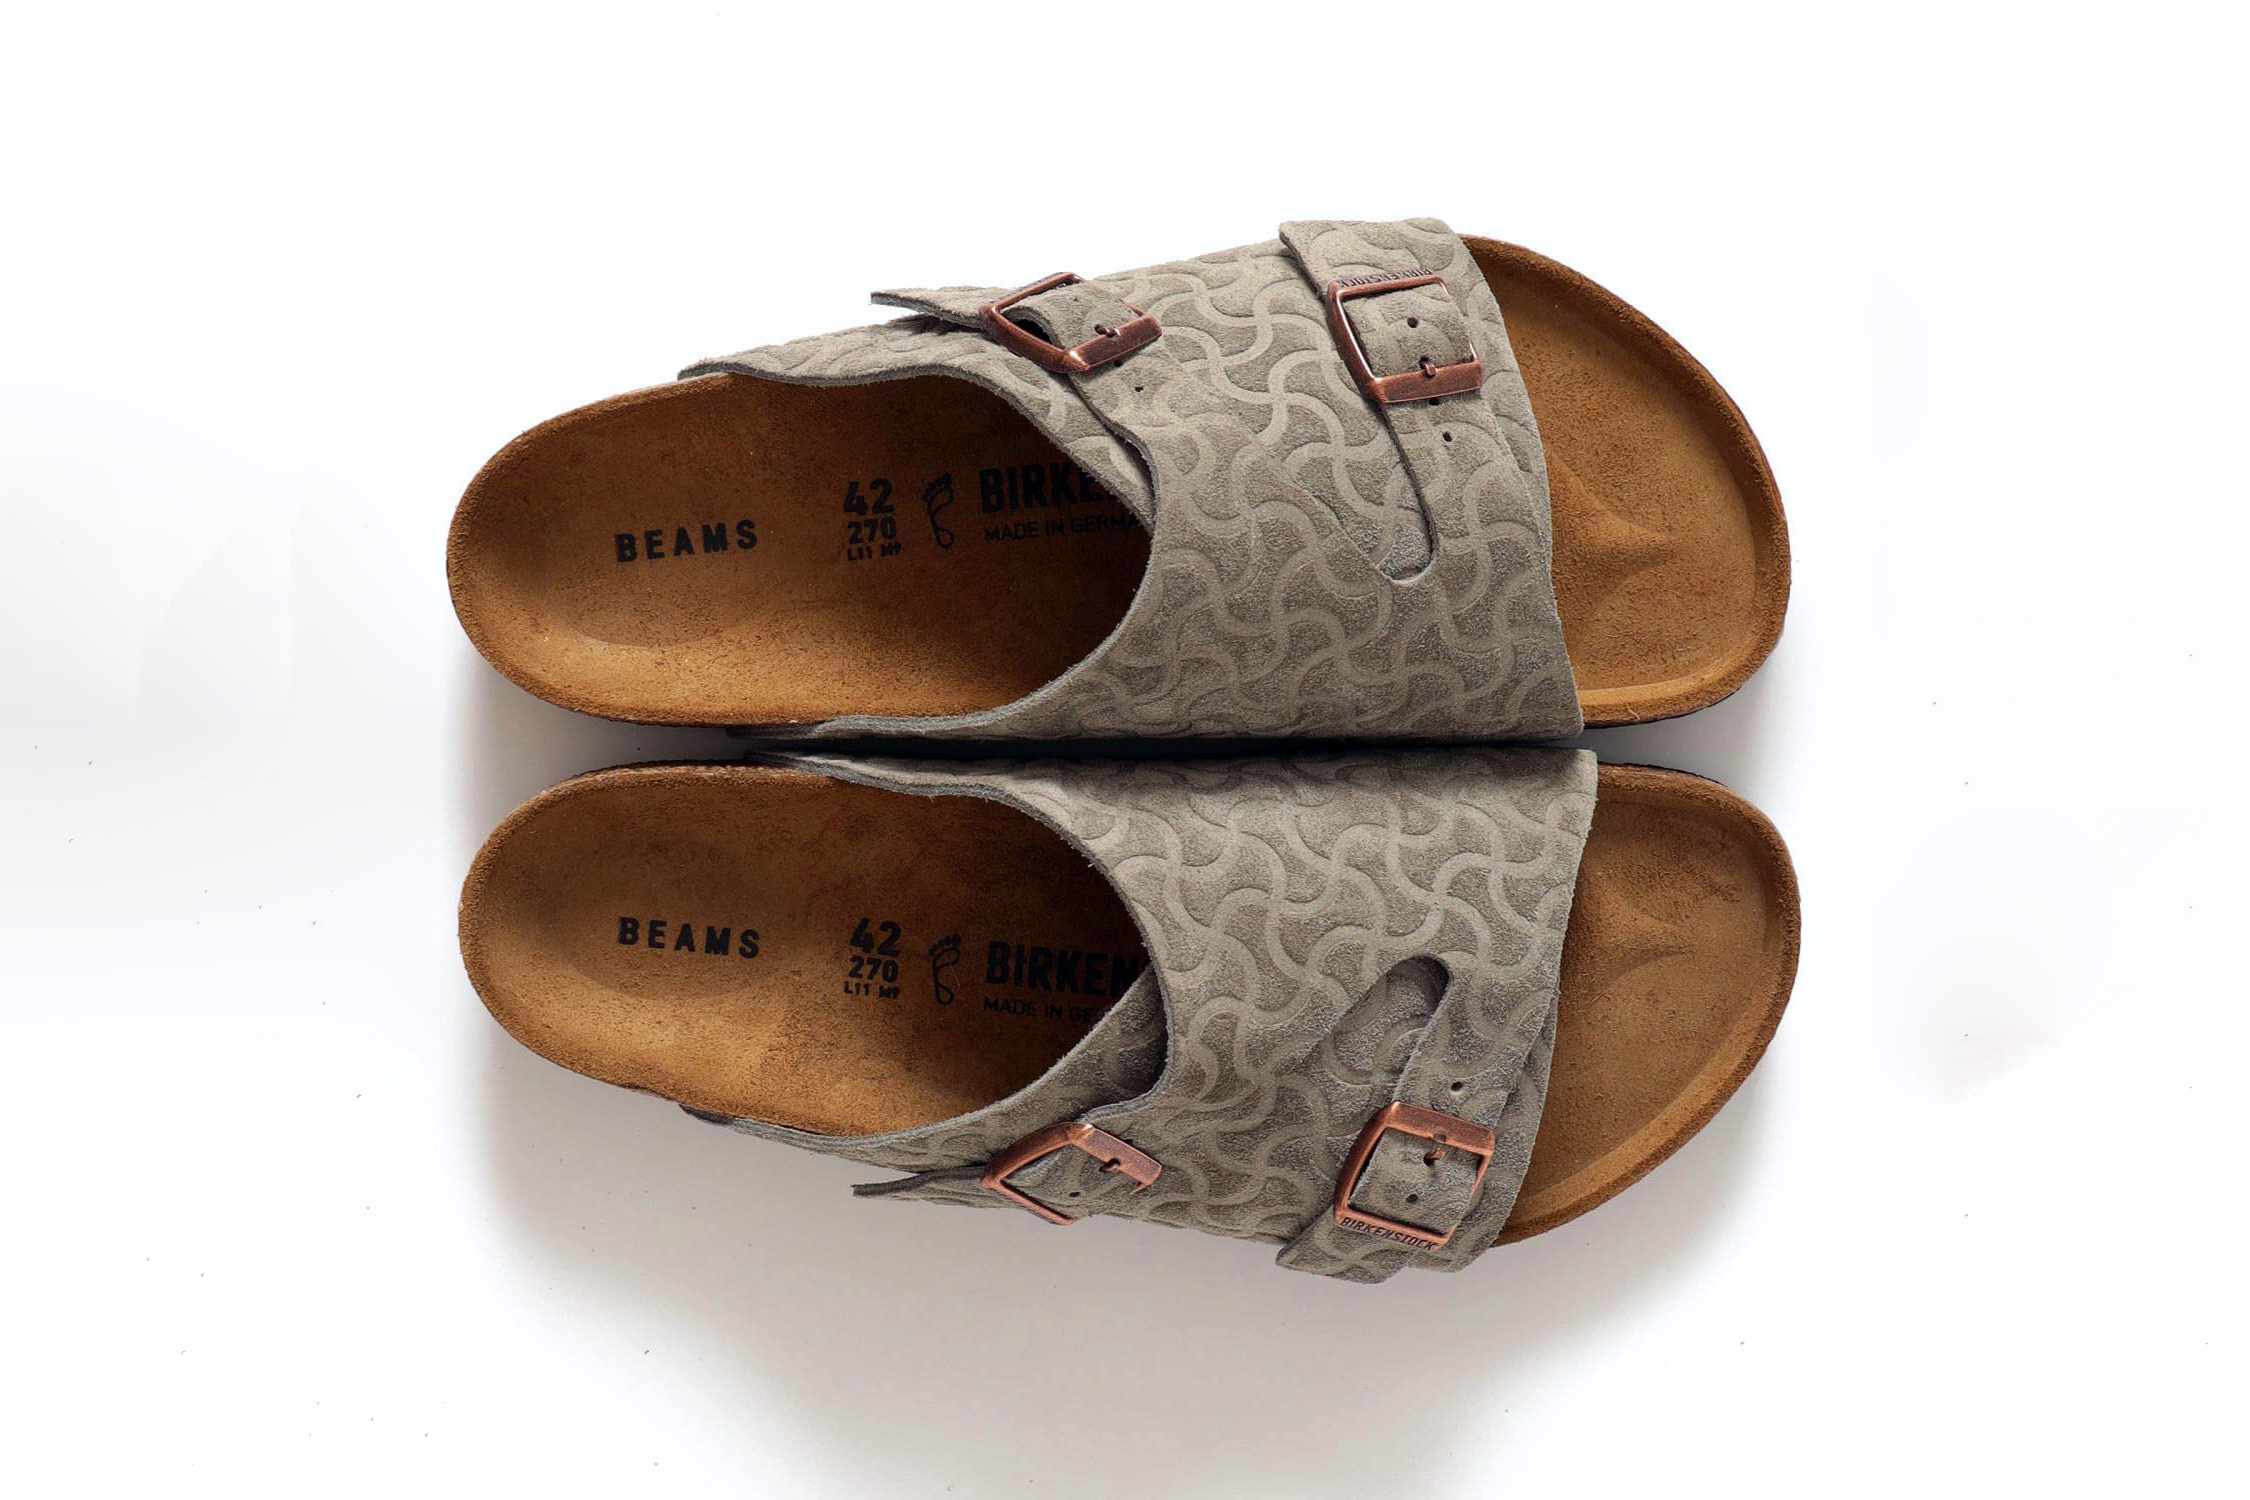 BEAMS' beige suede Birkenstock Zurich slide sandal with embossed swirling pattern and black sole